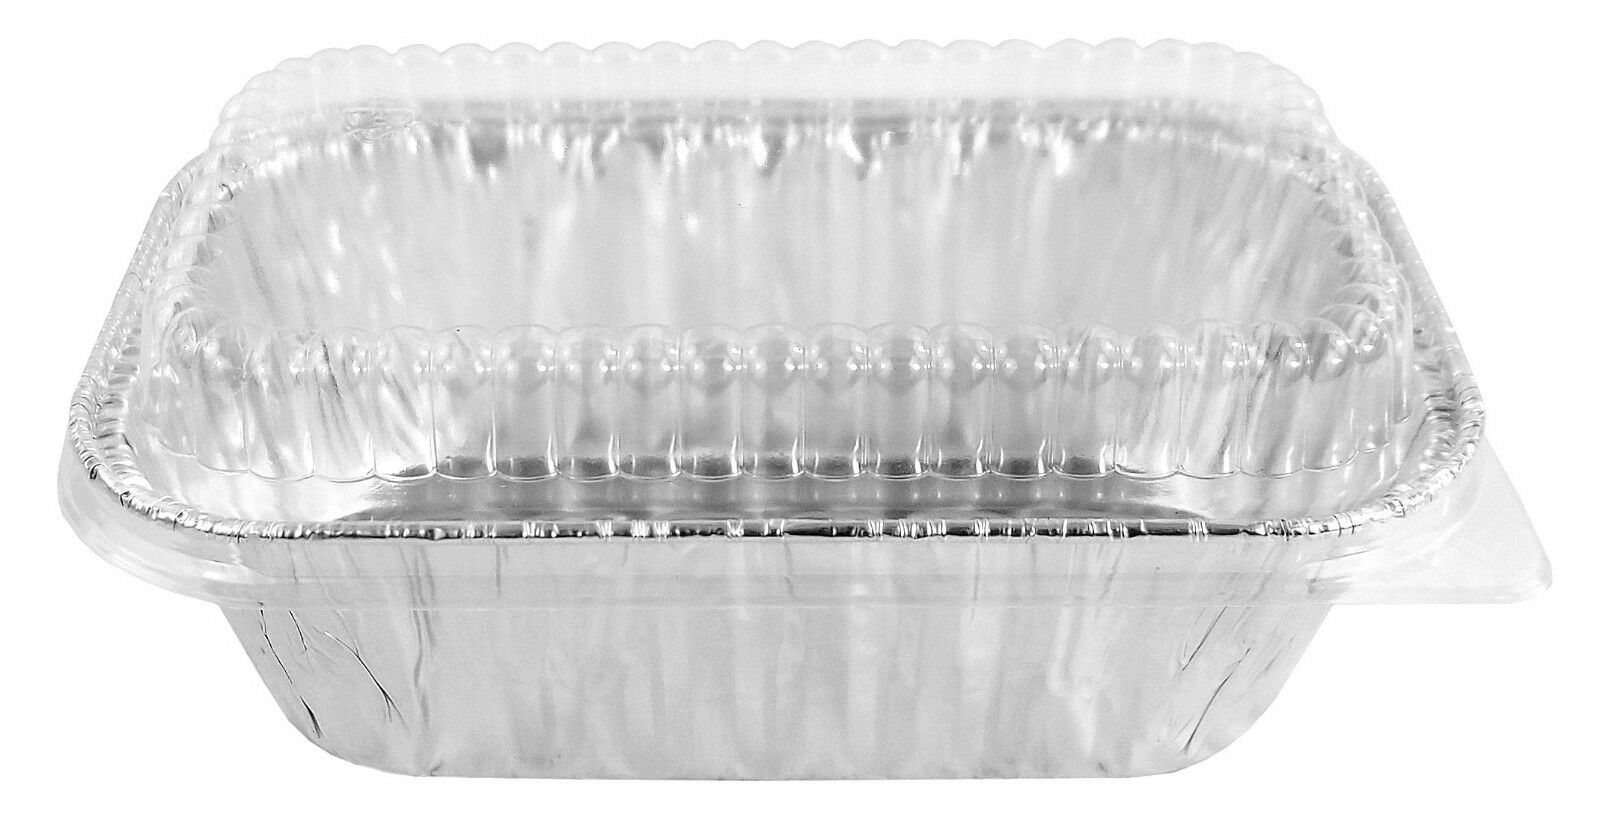 DDI 2269694 Aluminum 1 lb. Loaf Pan - Nicole Home Collection Case